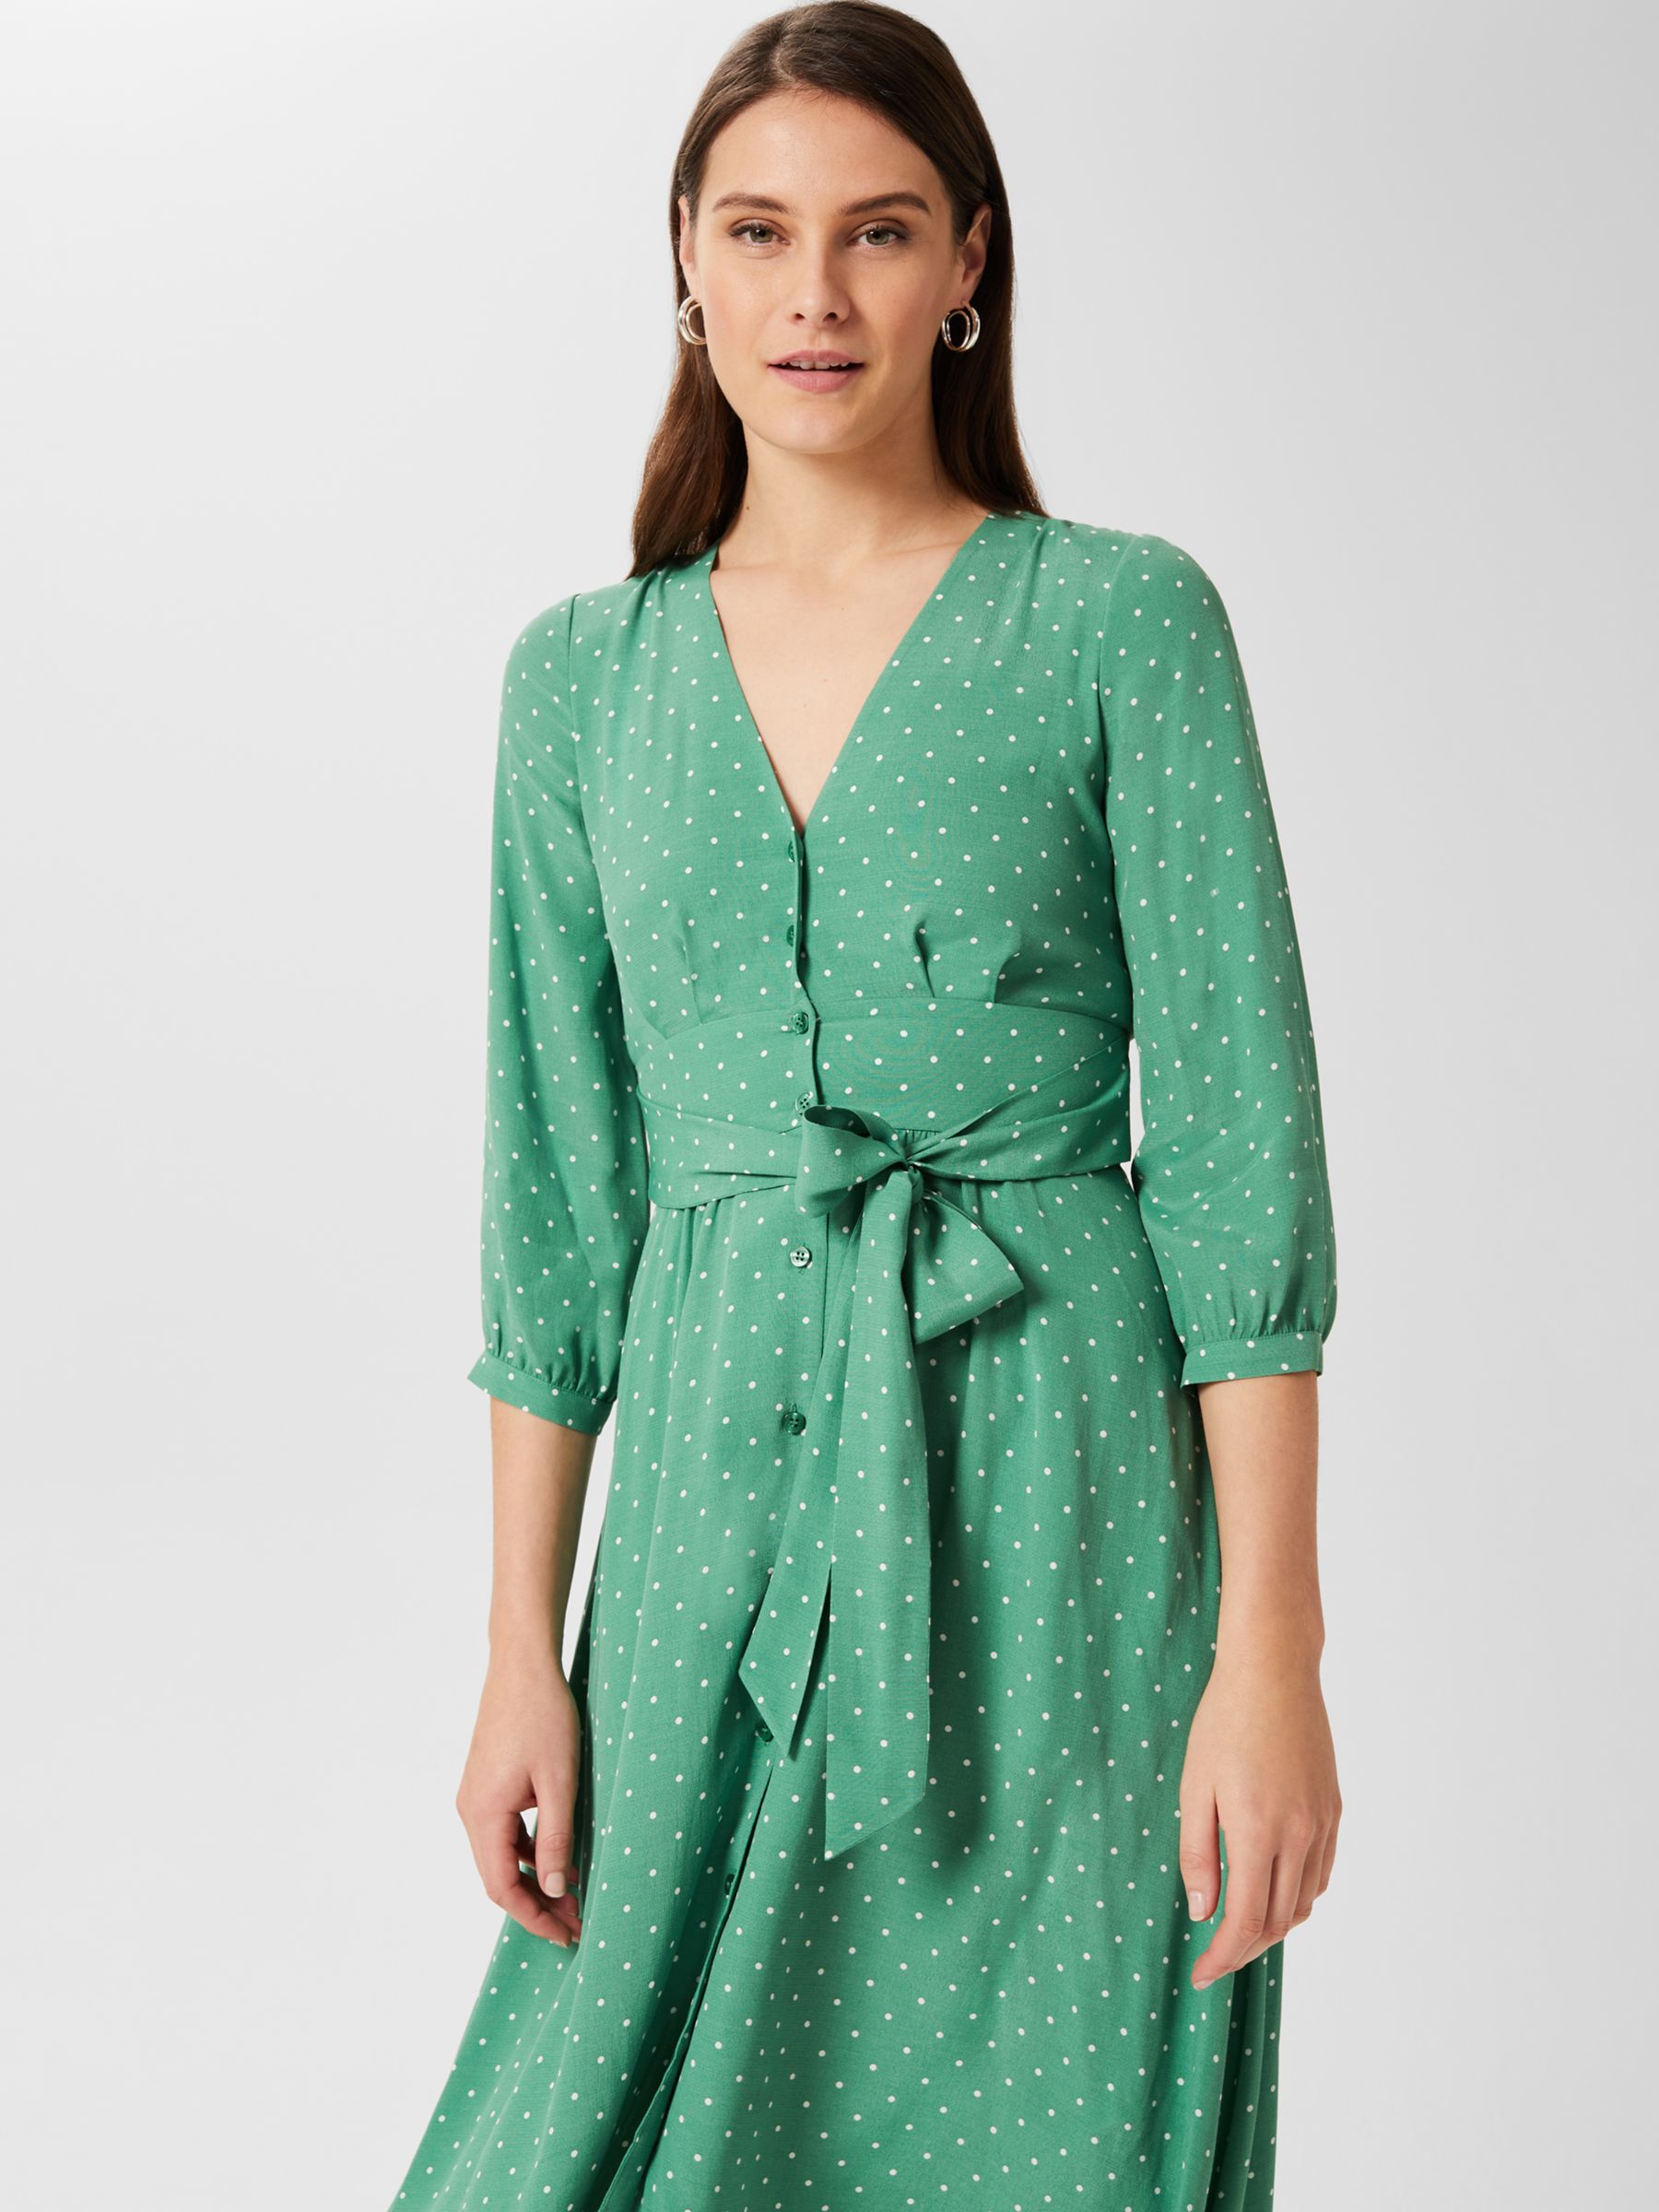 Hobbs Magnolia Polka Dot Midi Dress, Green/Ivory, 6